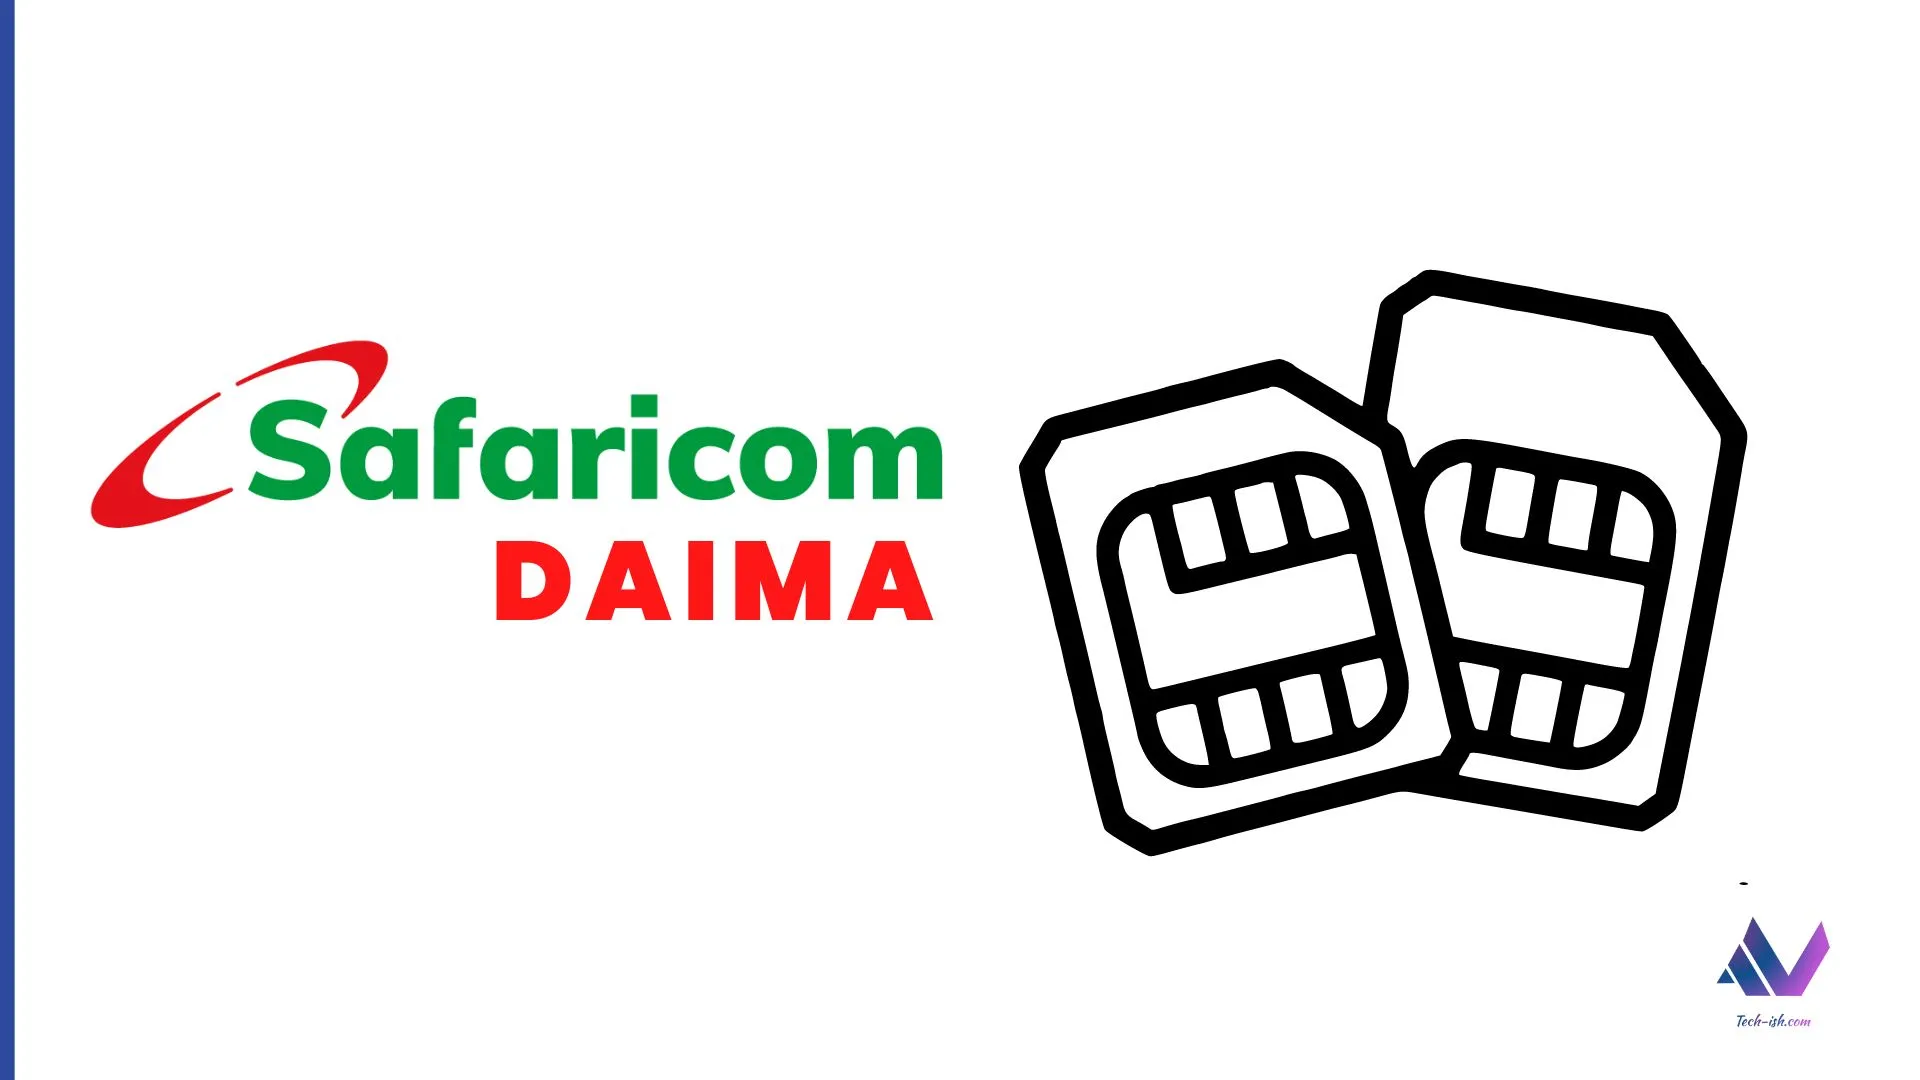 Safaricom Daima service: Keep your line active up to 2 years